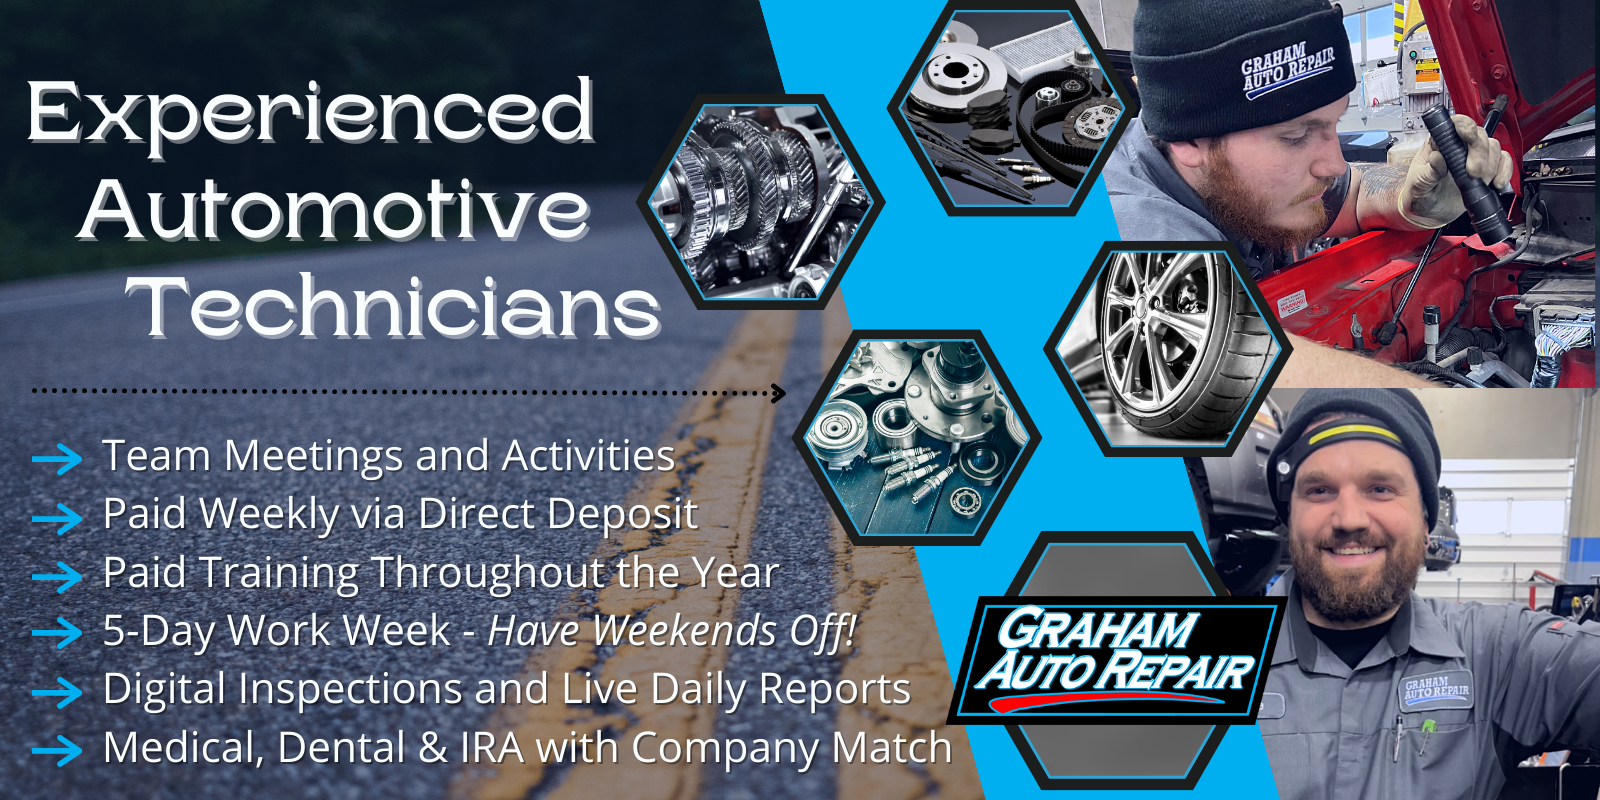 Experienced Automotive Technician Job at Graham Auto Repair